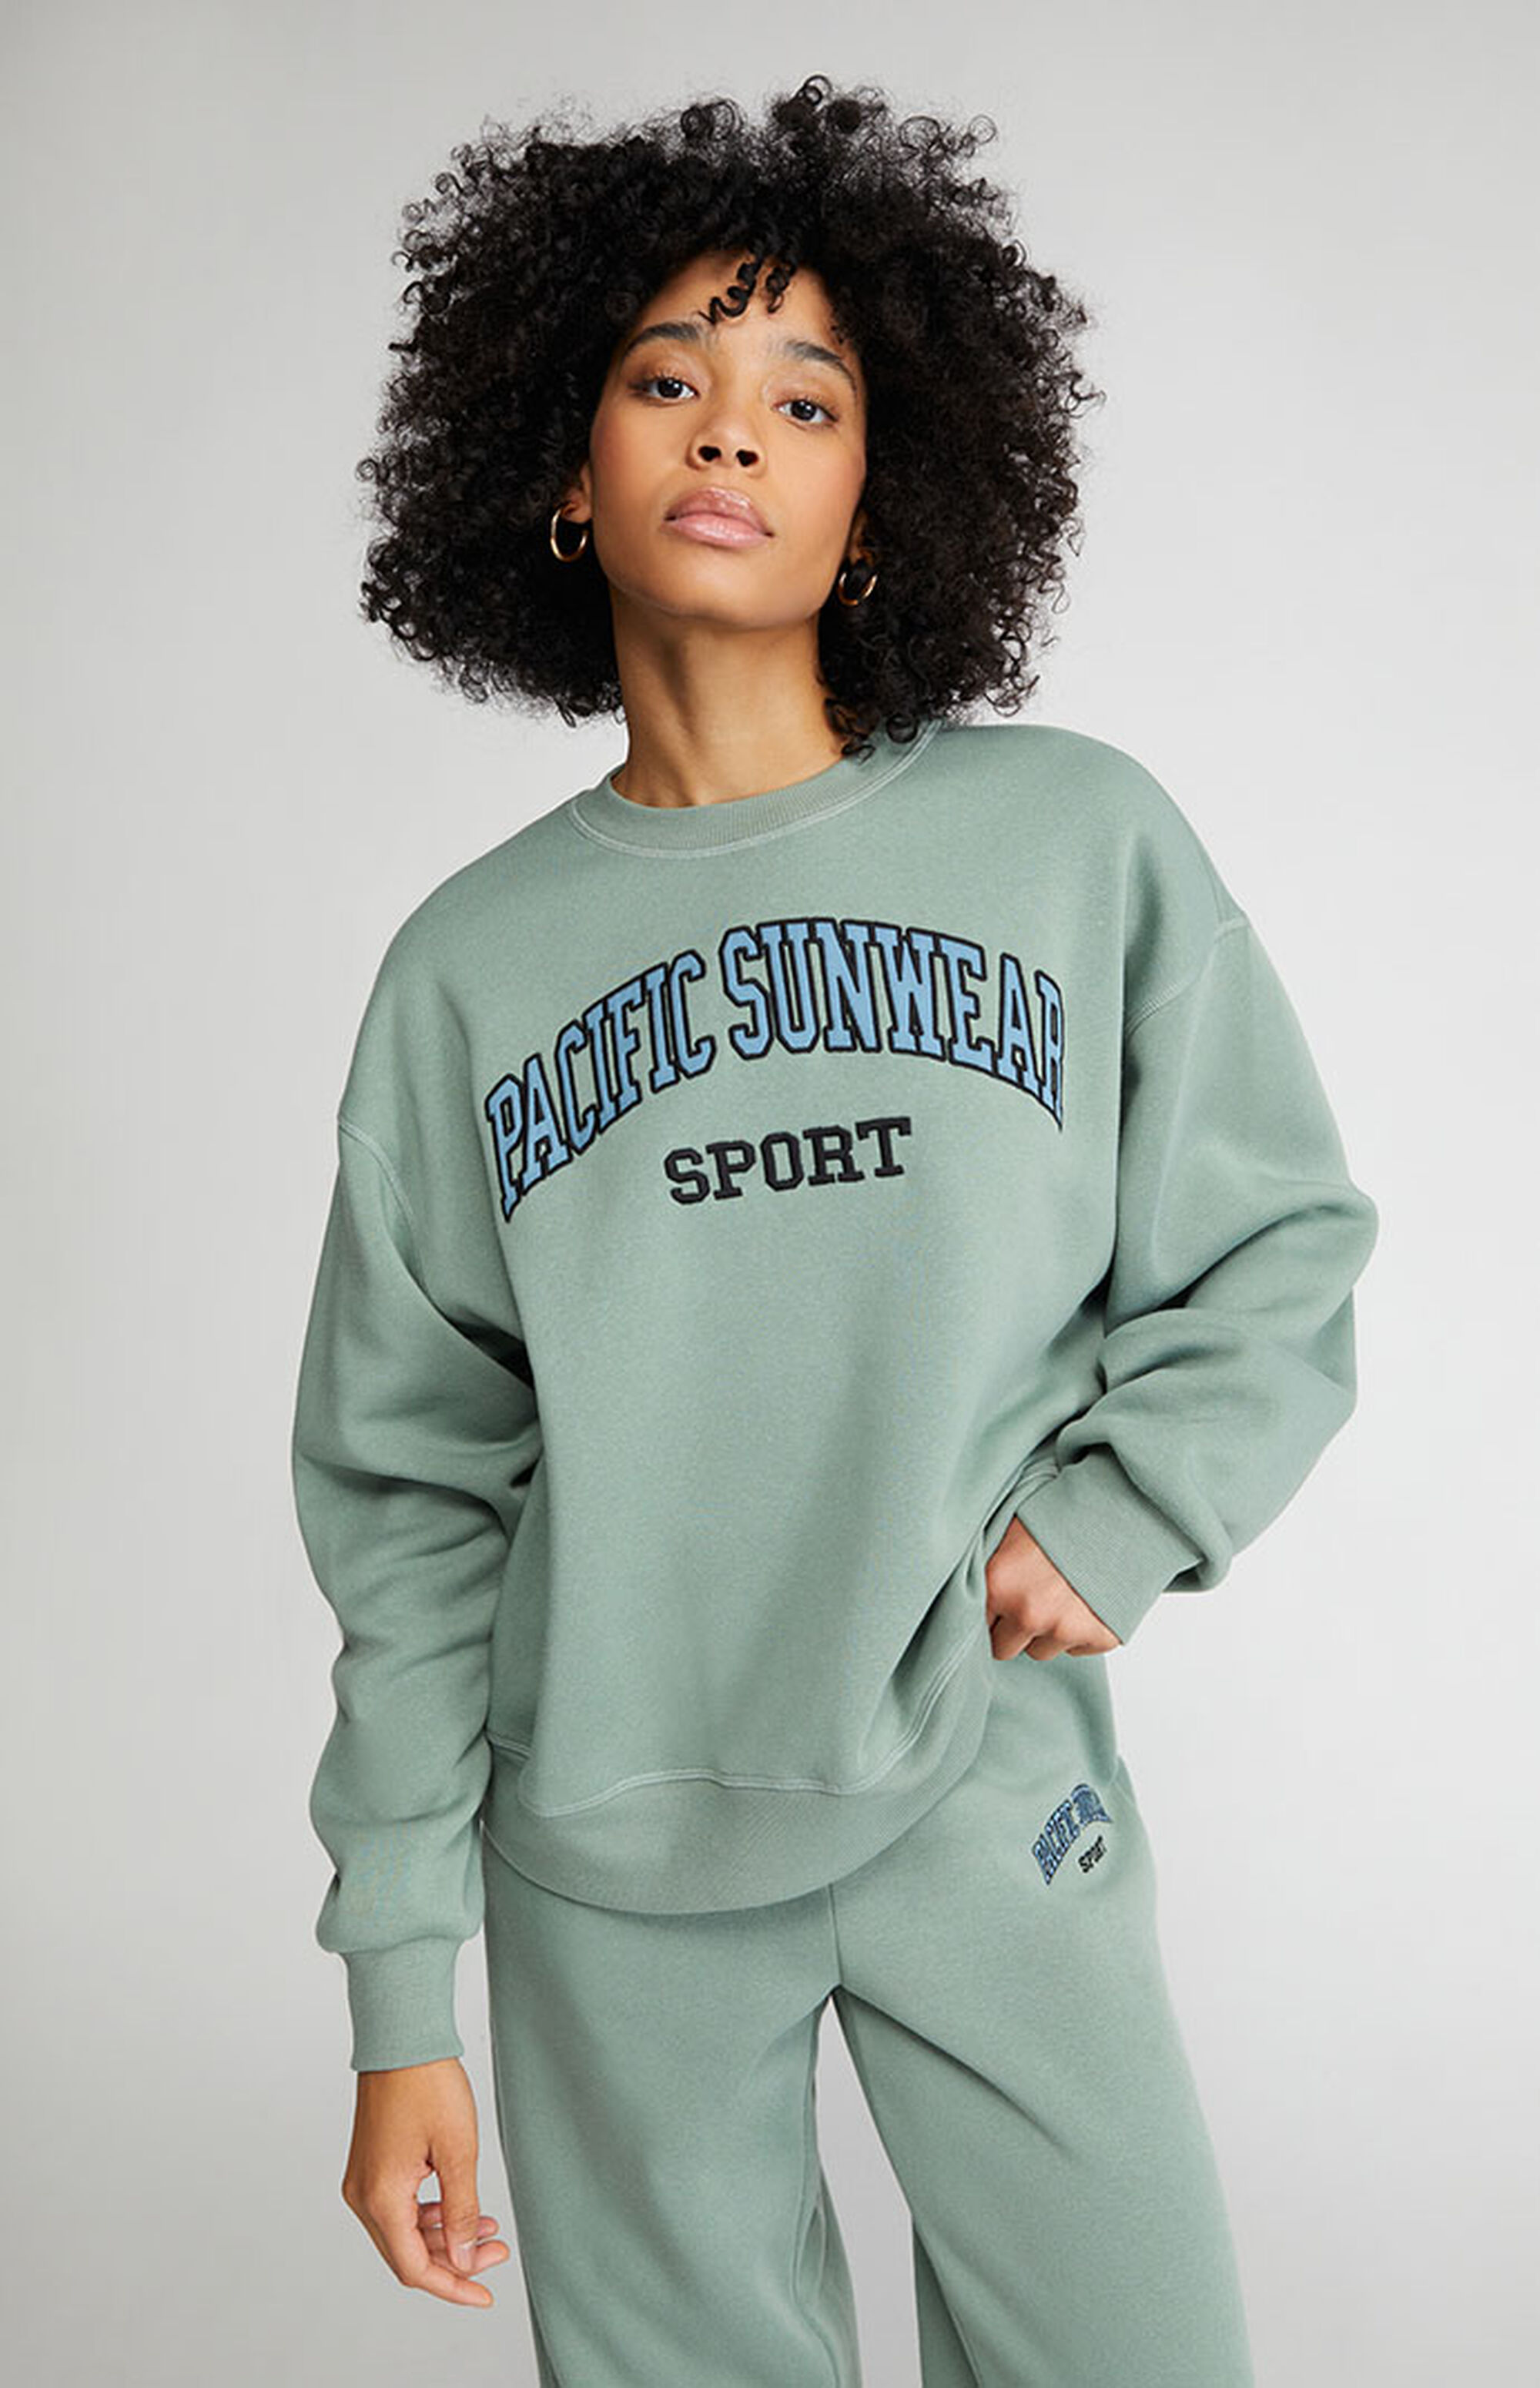 PacSun Pacific Sunwear Sport Sweatshirt | PacSun